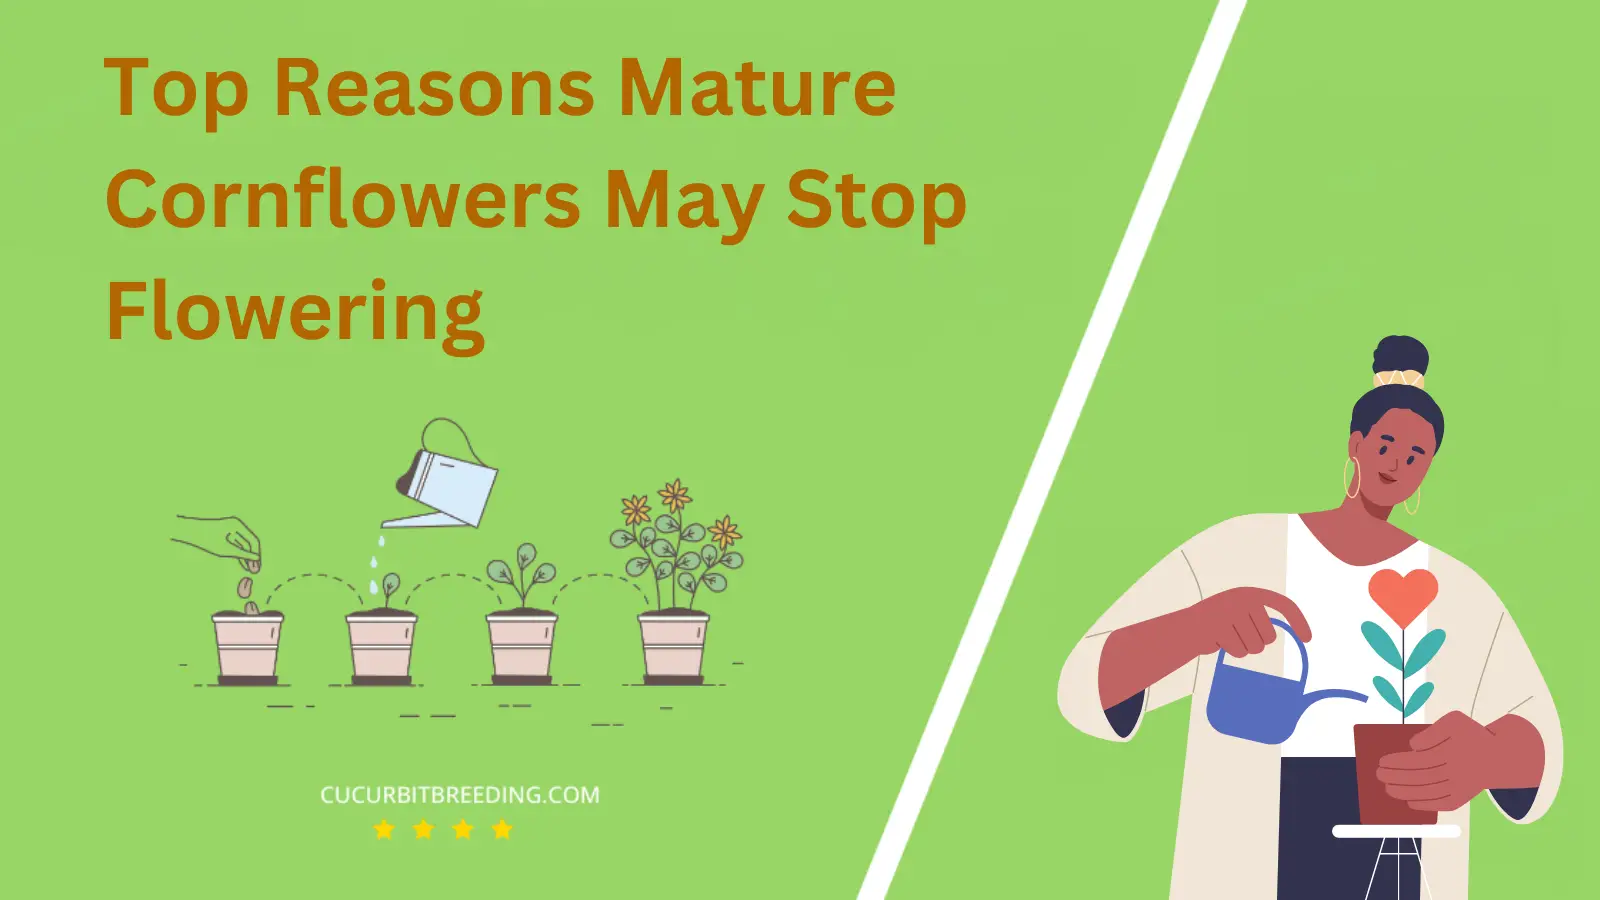 Top Reasons Mature Cornflowers May Stop Flowering